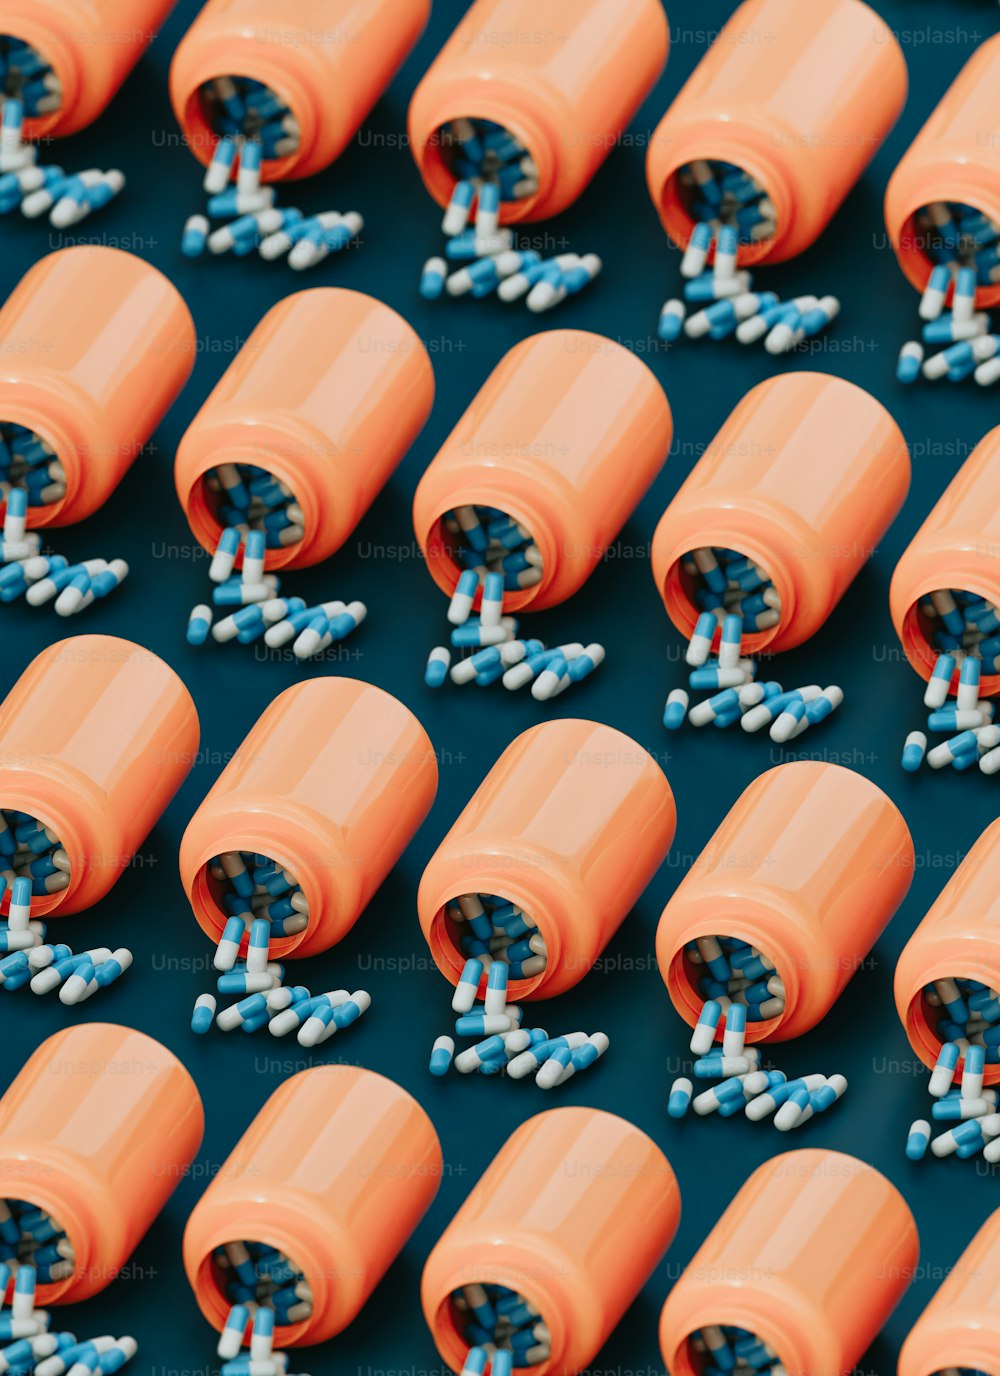 Un grupo de frascos de píldoras naranjas llenos de píldoras azules y blancas